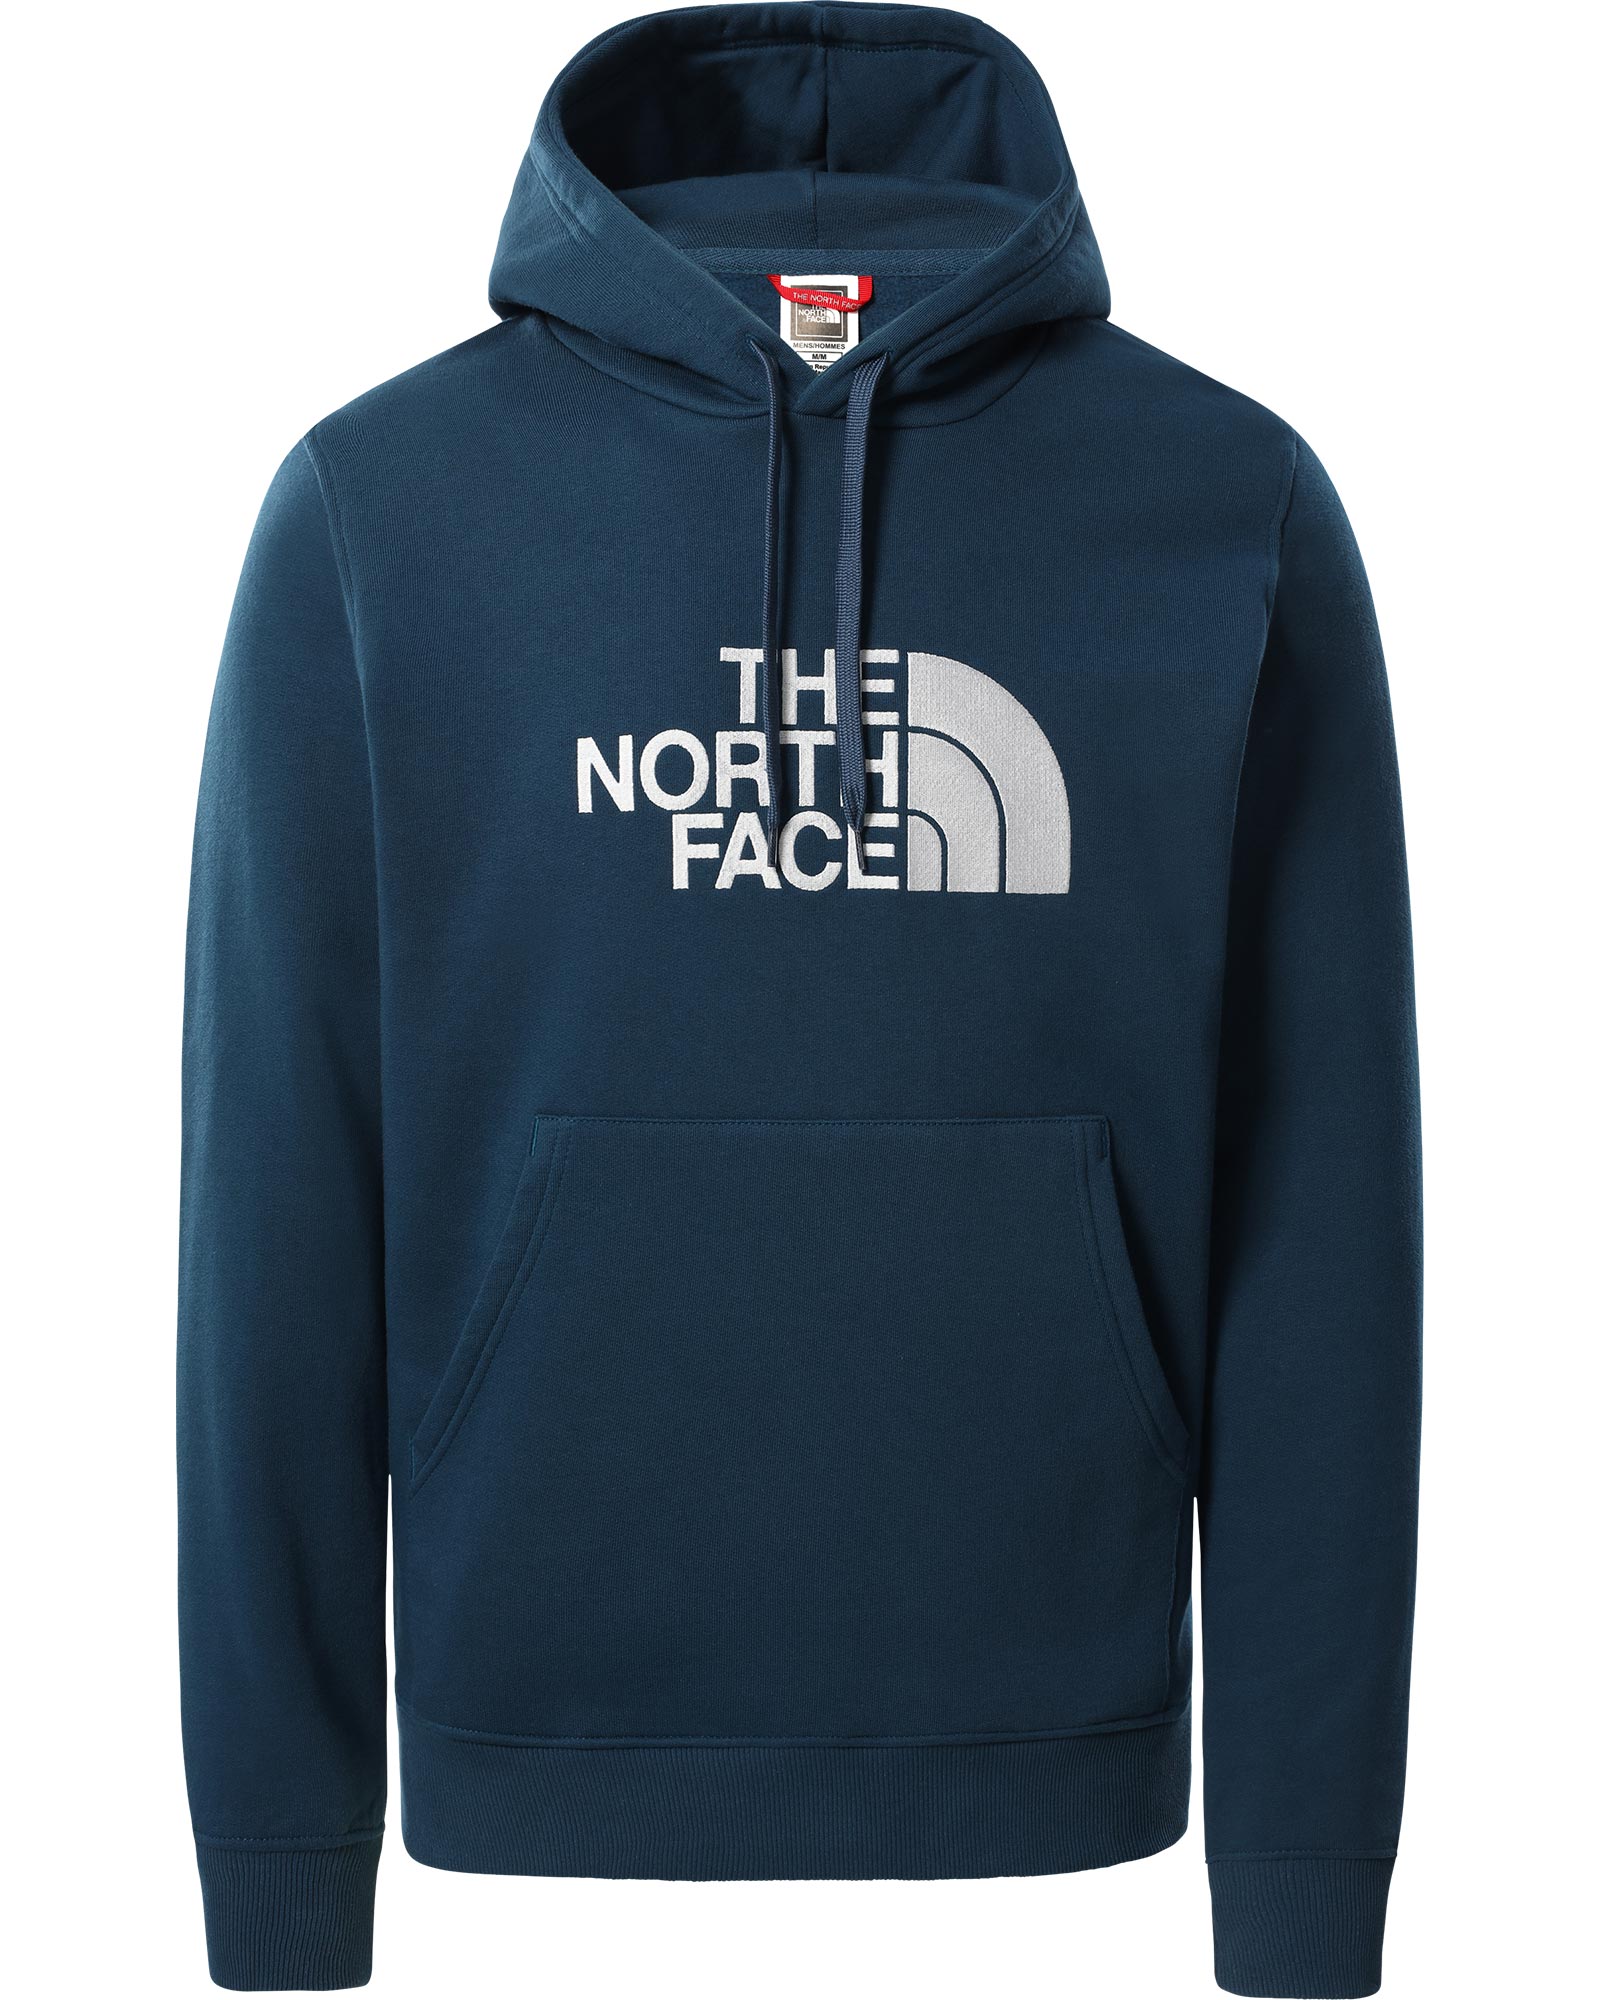 The North Face Drew Peak Men’s Hoodie - Monterey Blue XS